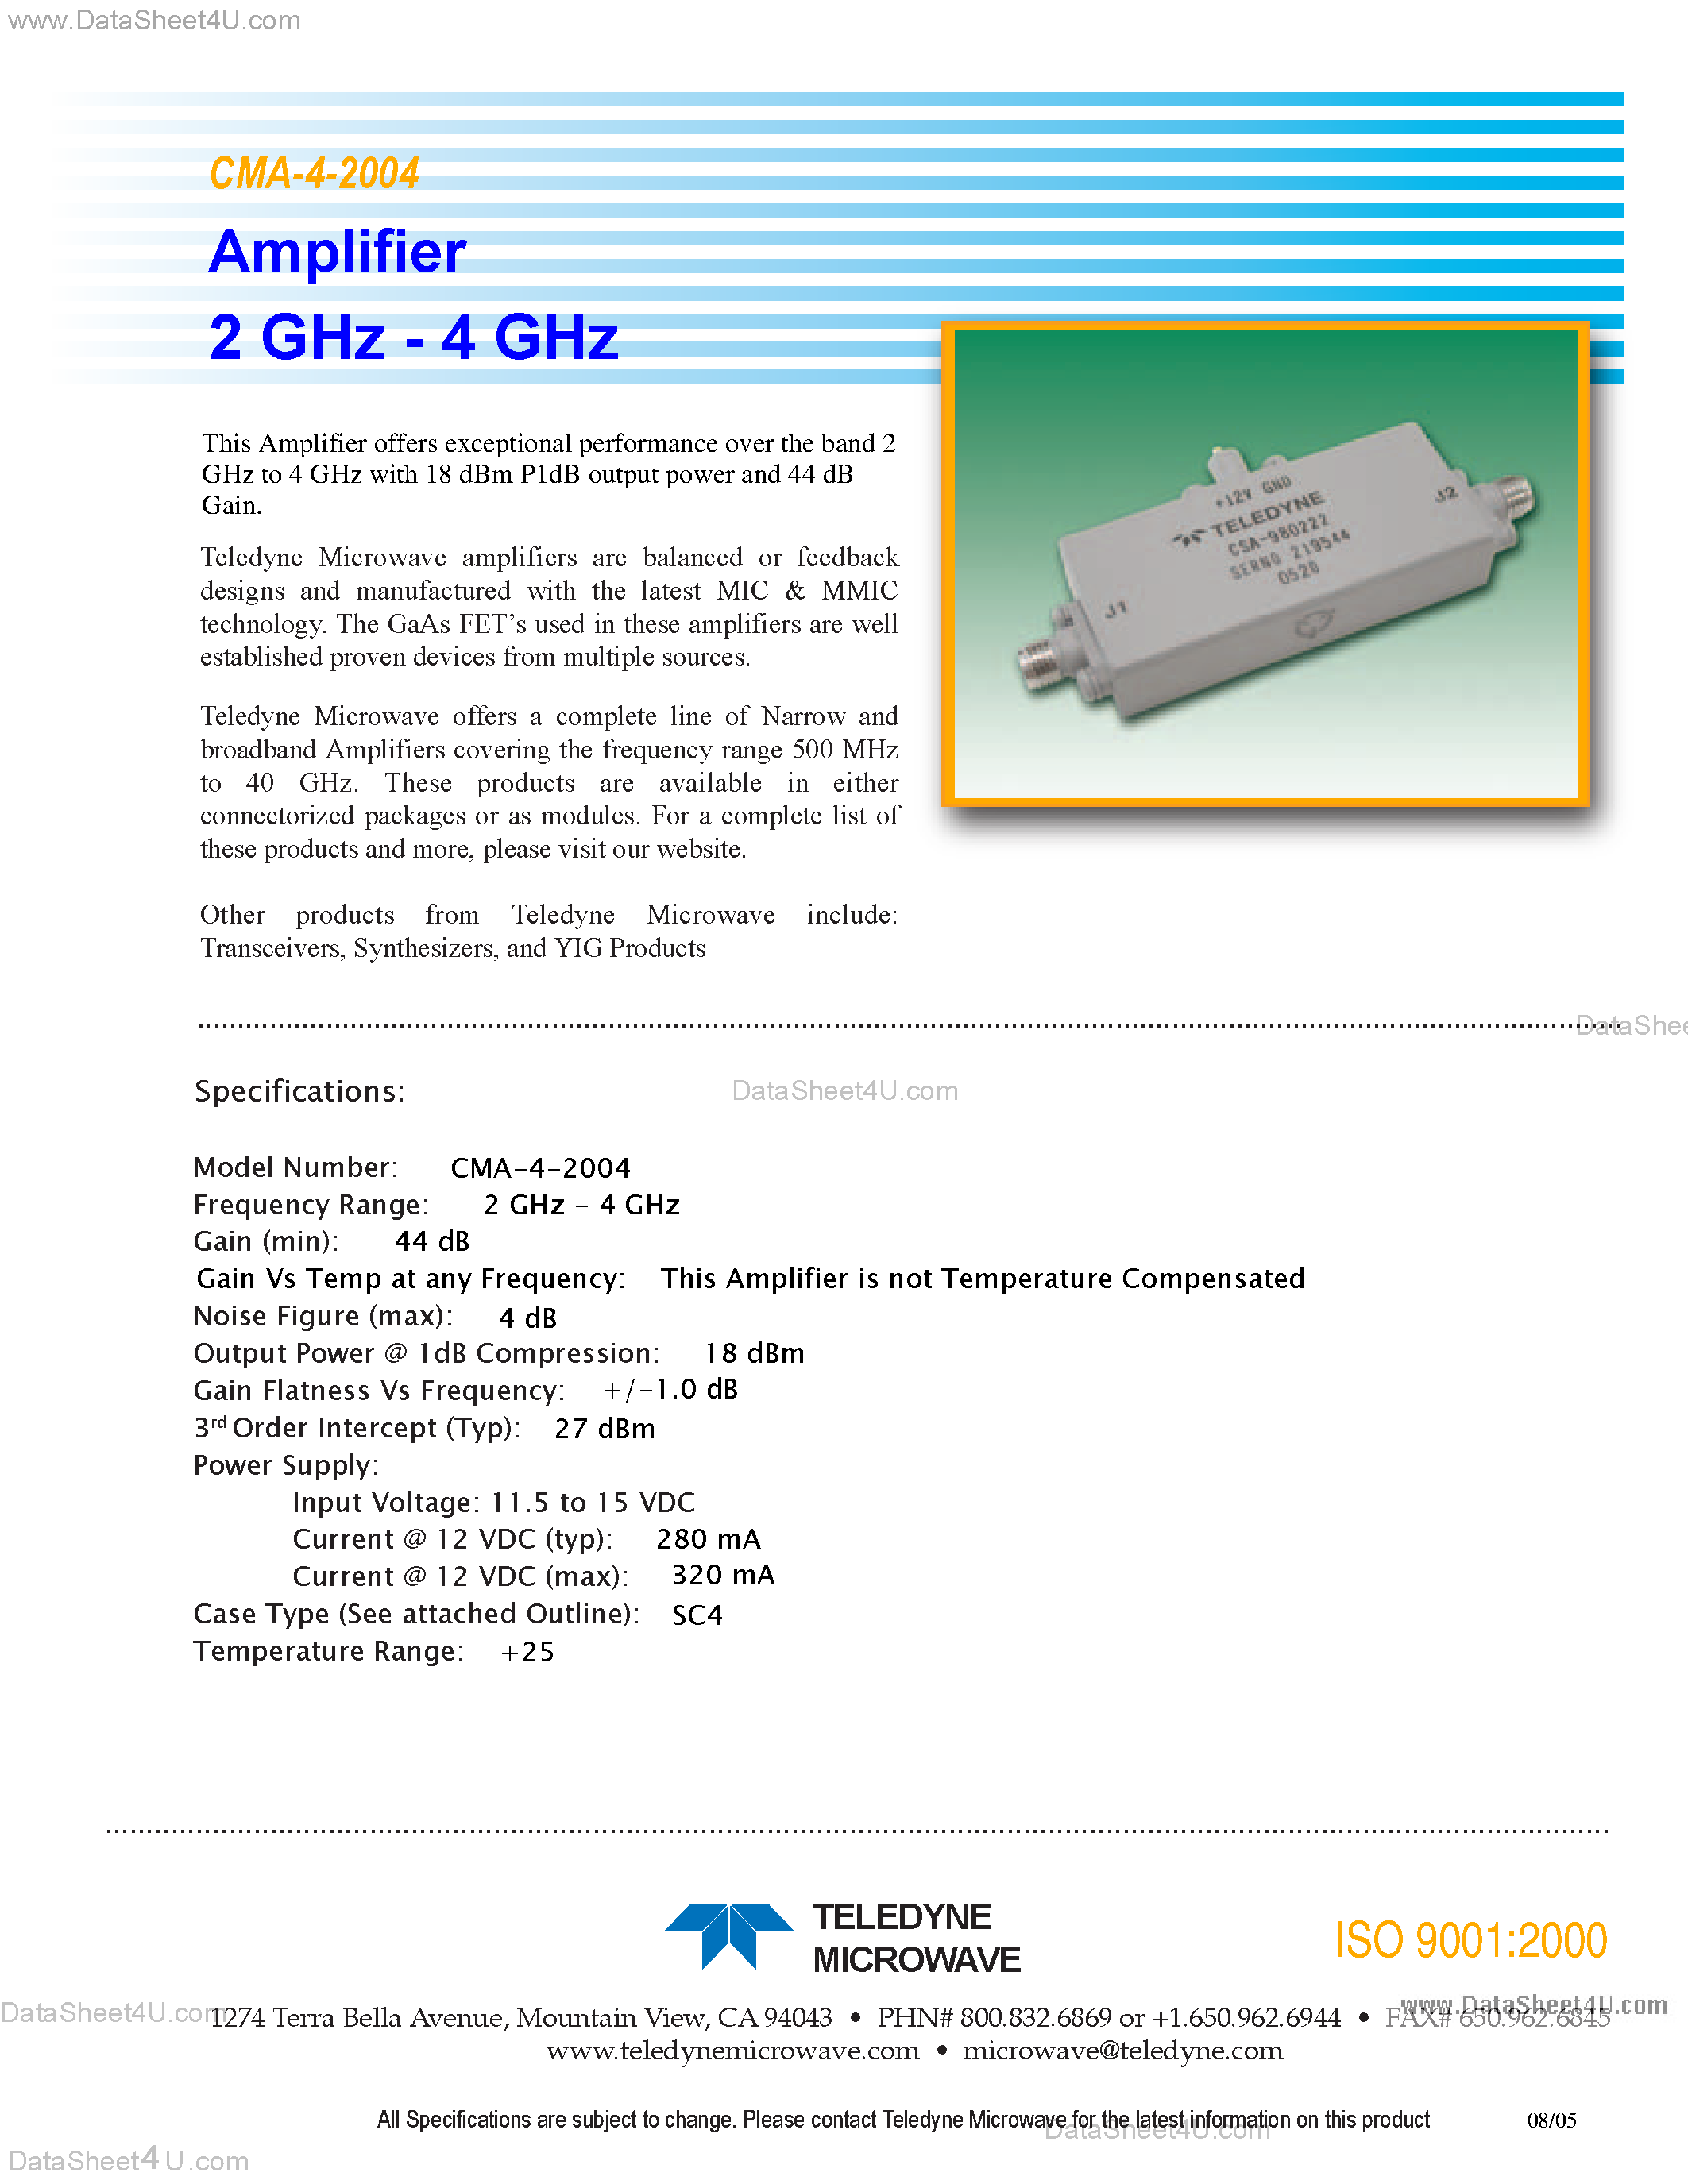 Даташит CMA-4-2004-Amplifier 2 GHz - 4 GHz страница 1